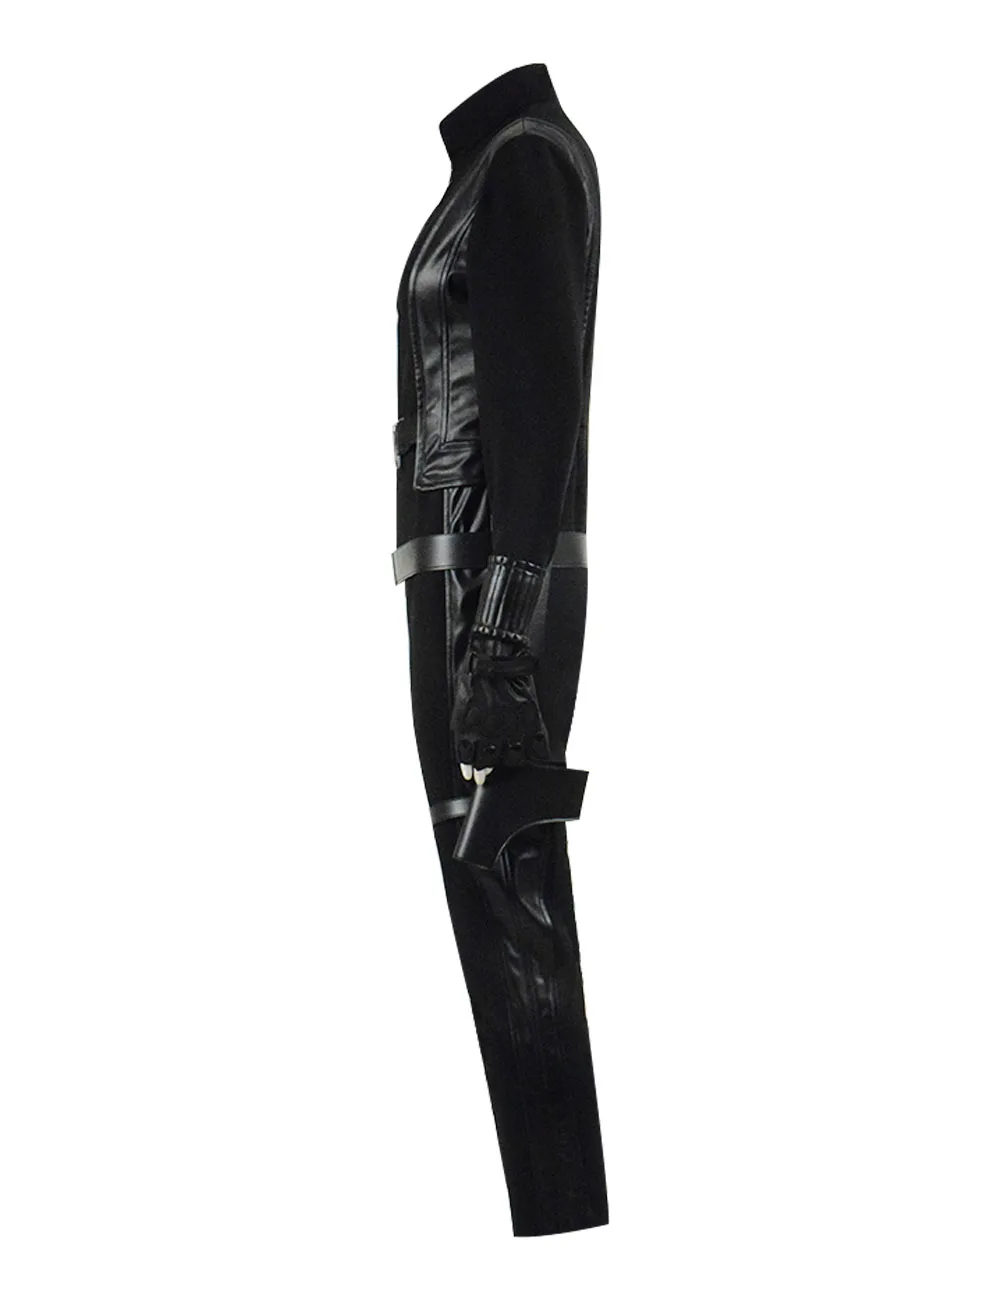 Cosdaddy Natasha Romanoff Widow косплей костюм черный комбинезон полный комплект Женский боевой костюм на Хэллоуин боди